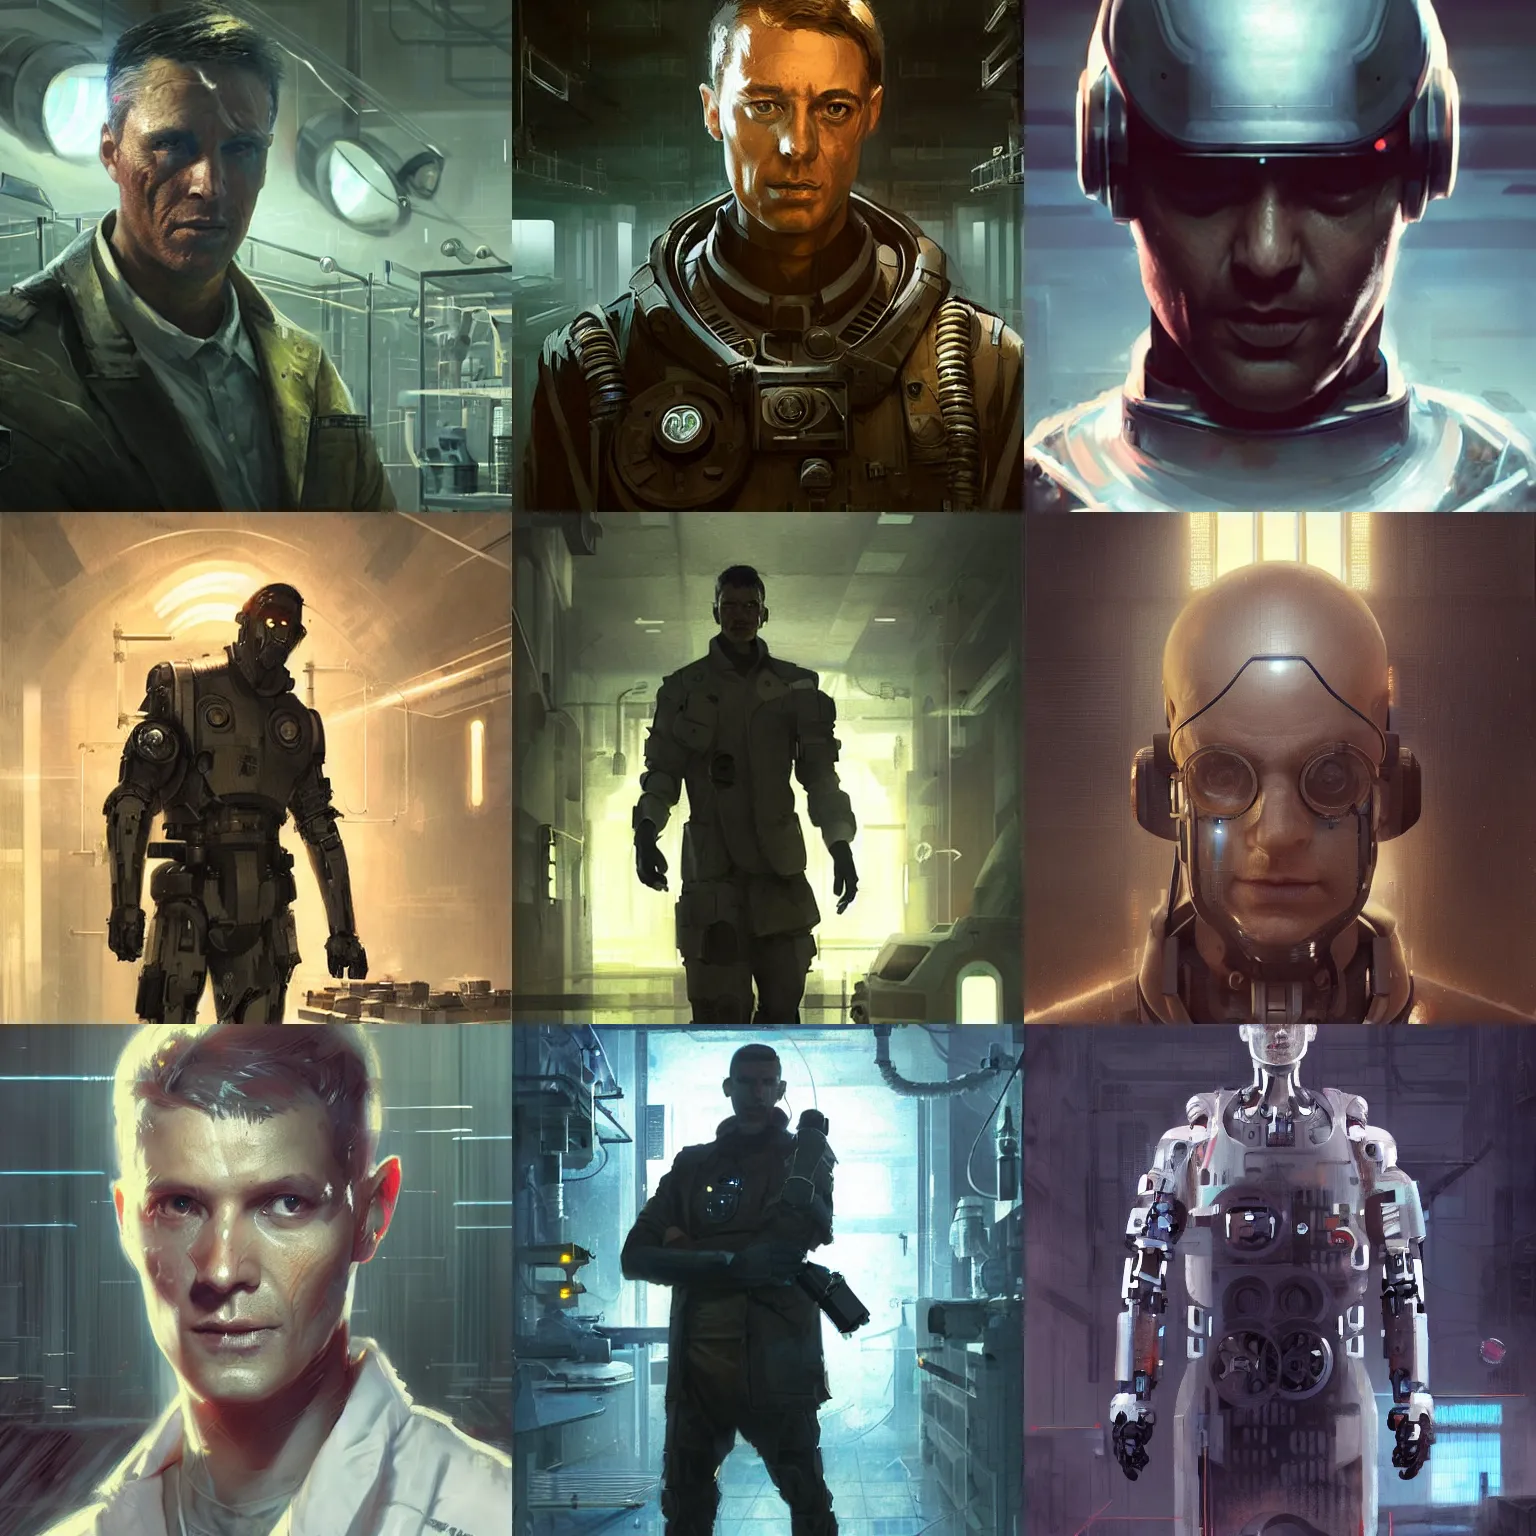 Prompt: a laboratory operator man with cybernetic enhancements, dystopian scifi gear, scifi character portrait by greg rutkowski, craig mullins, cinematic lighting